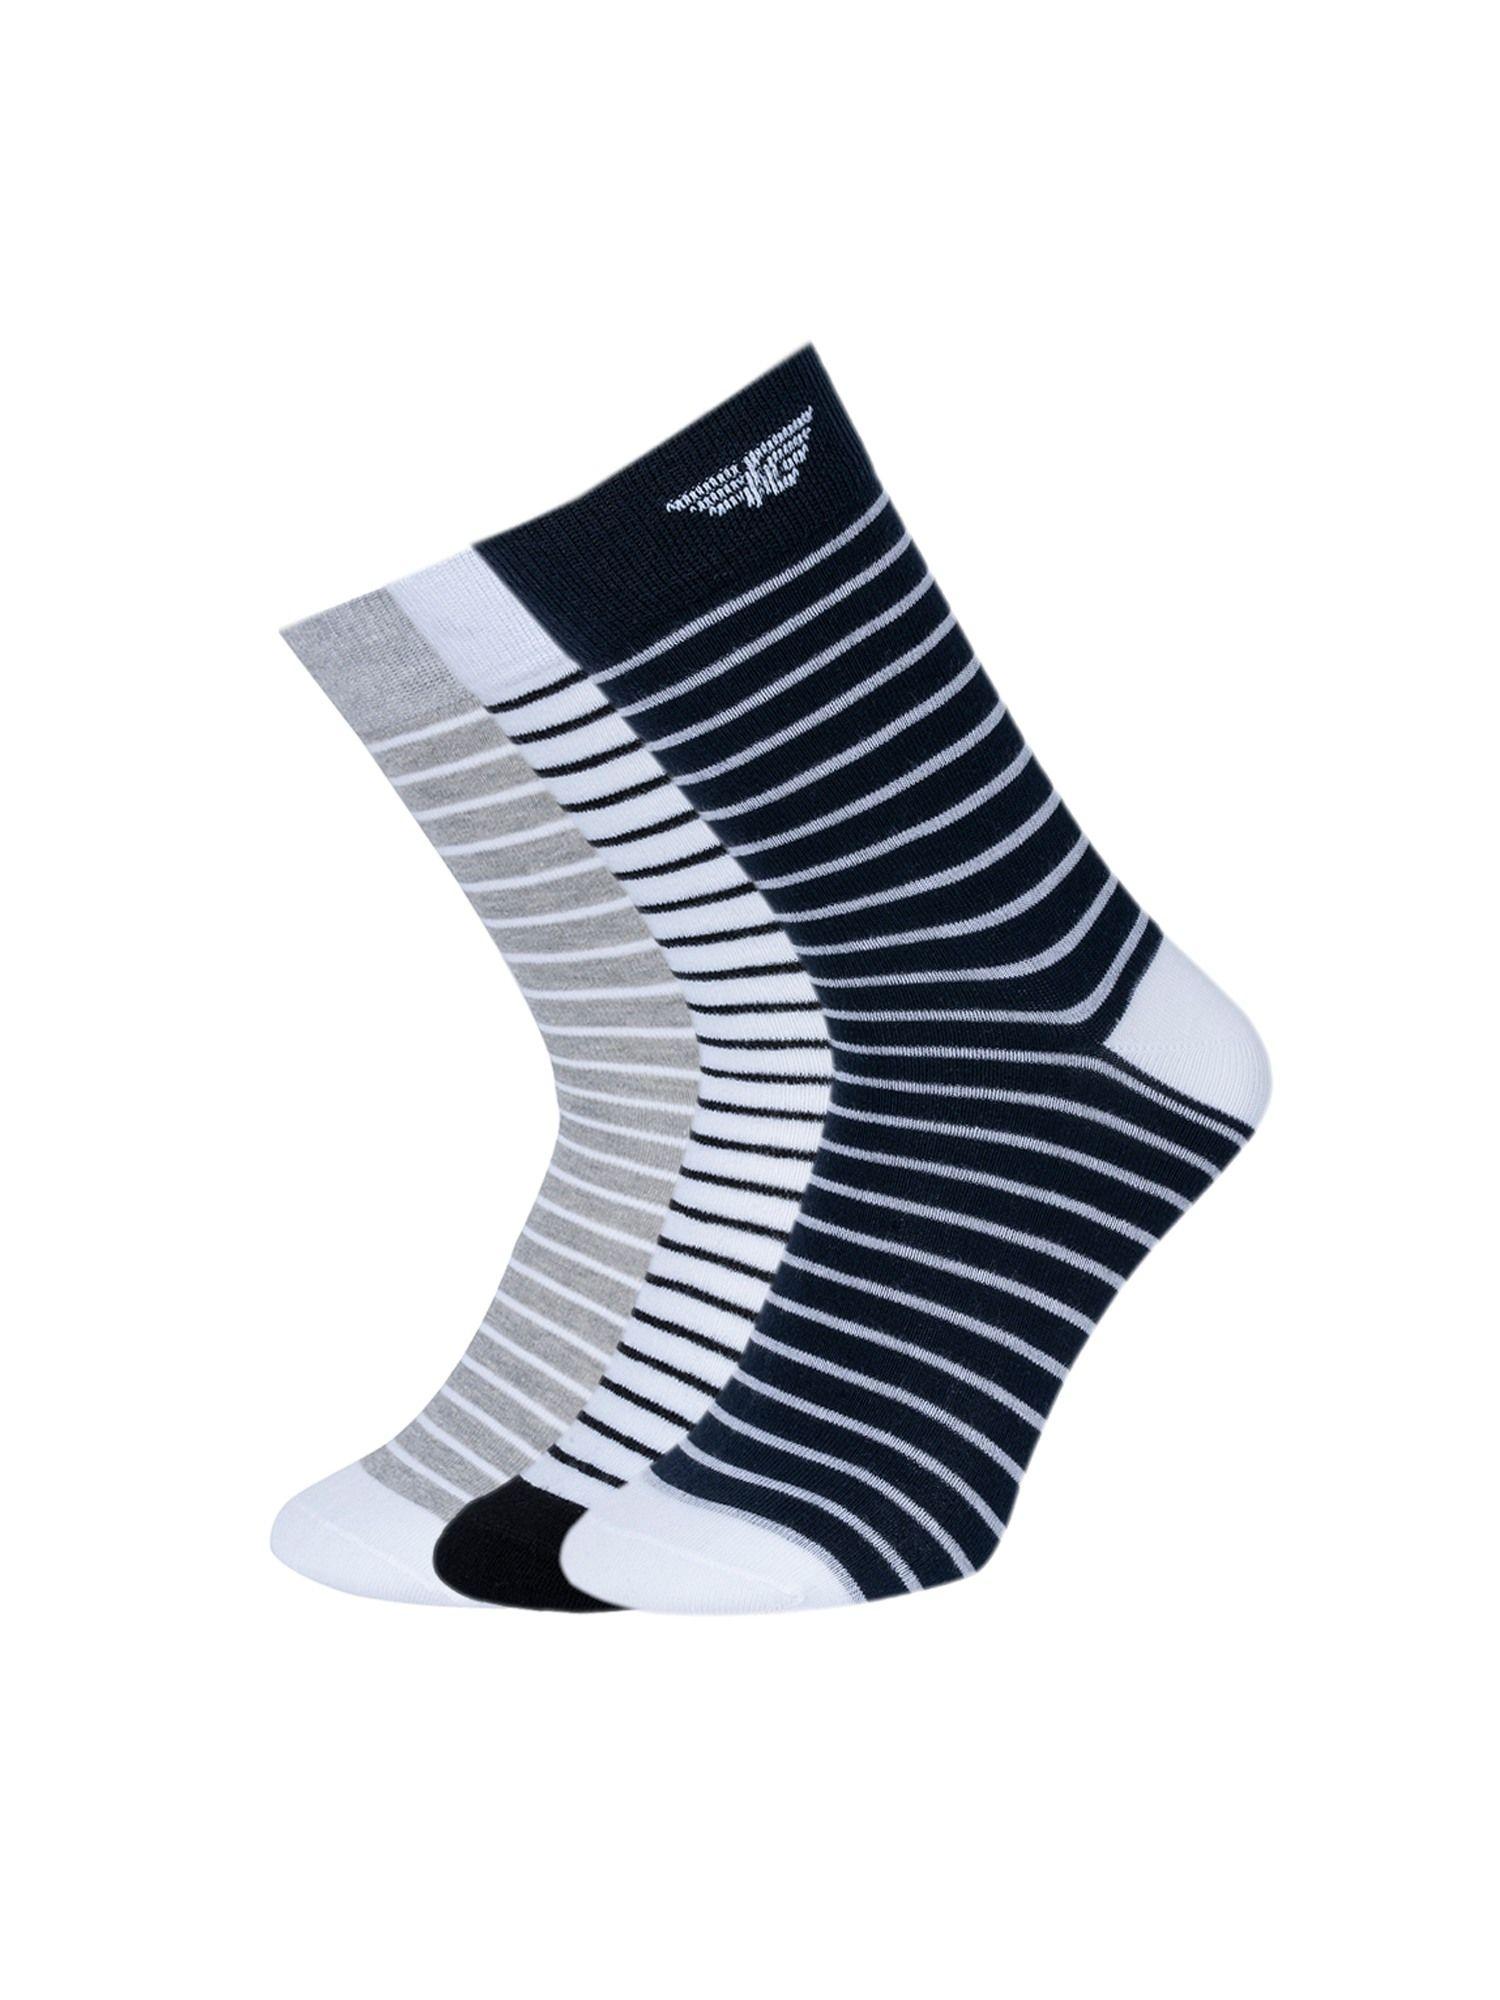 men-multi-color-stripe-above-ankle-socks-(pack-of-3)